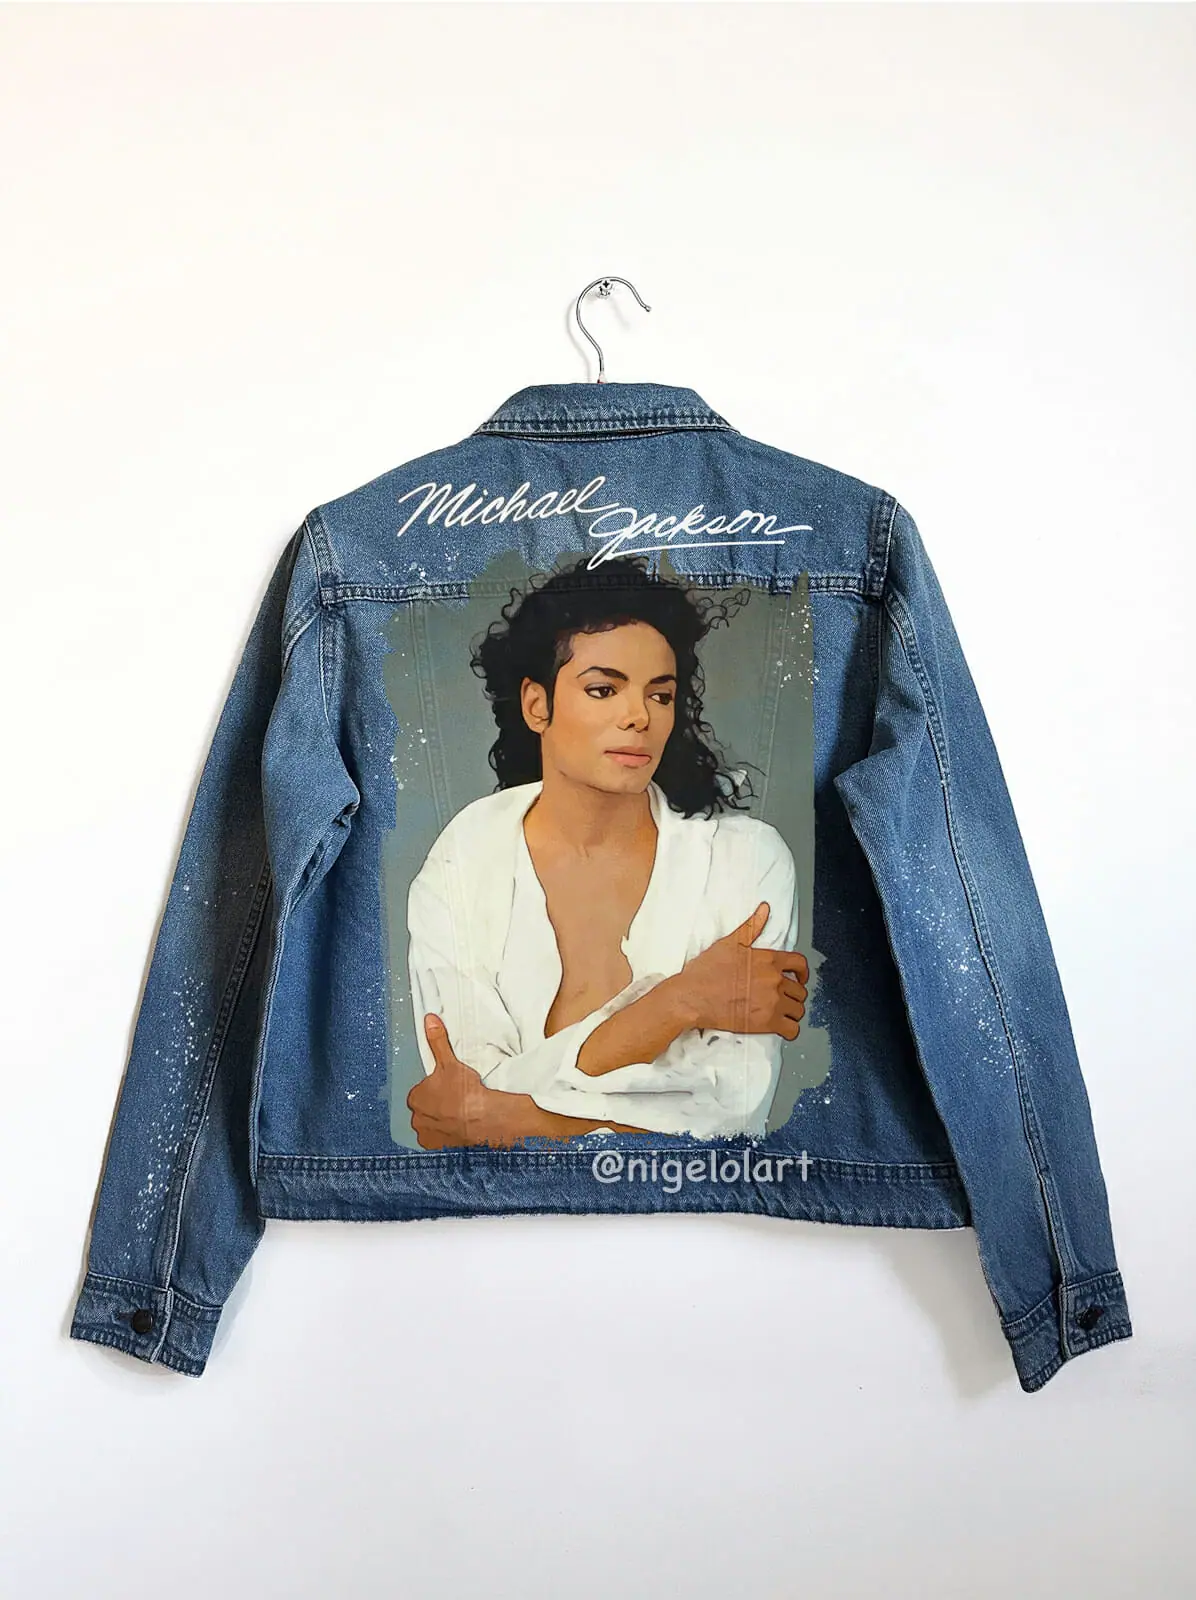 Michael Jackson Painted denim jacket personalized Gift